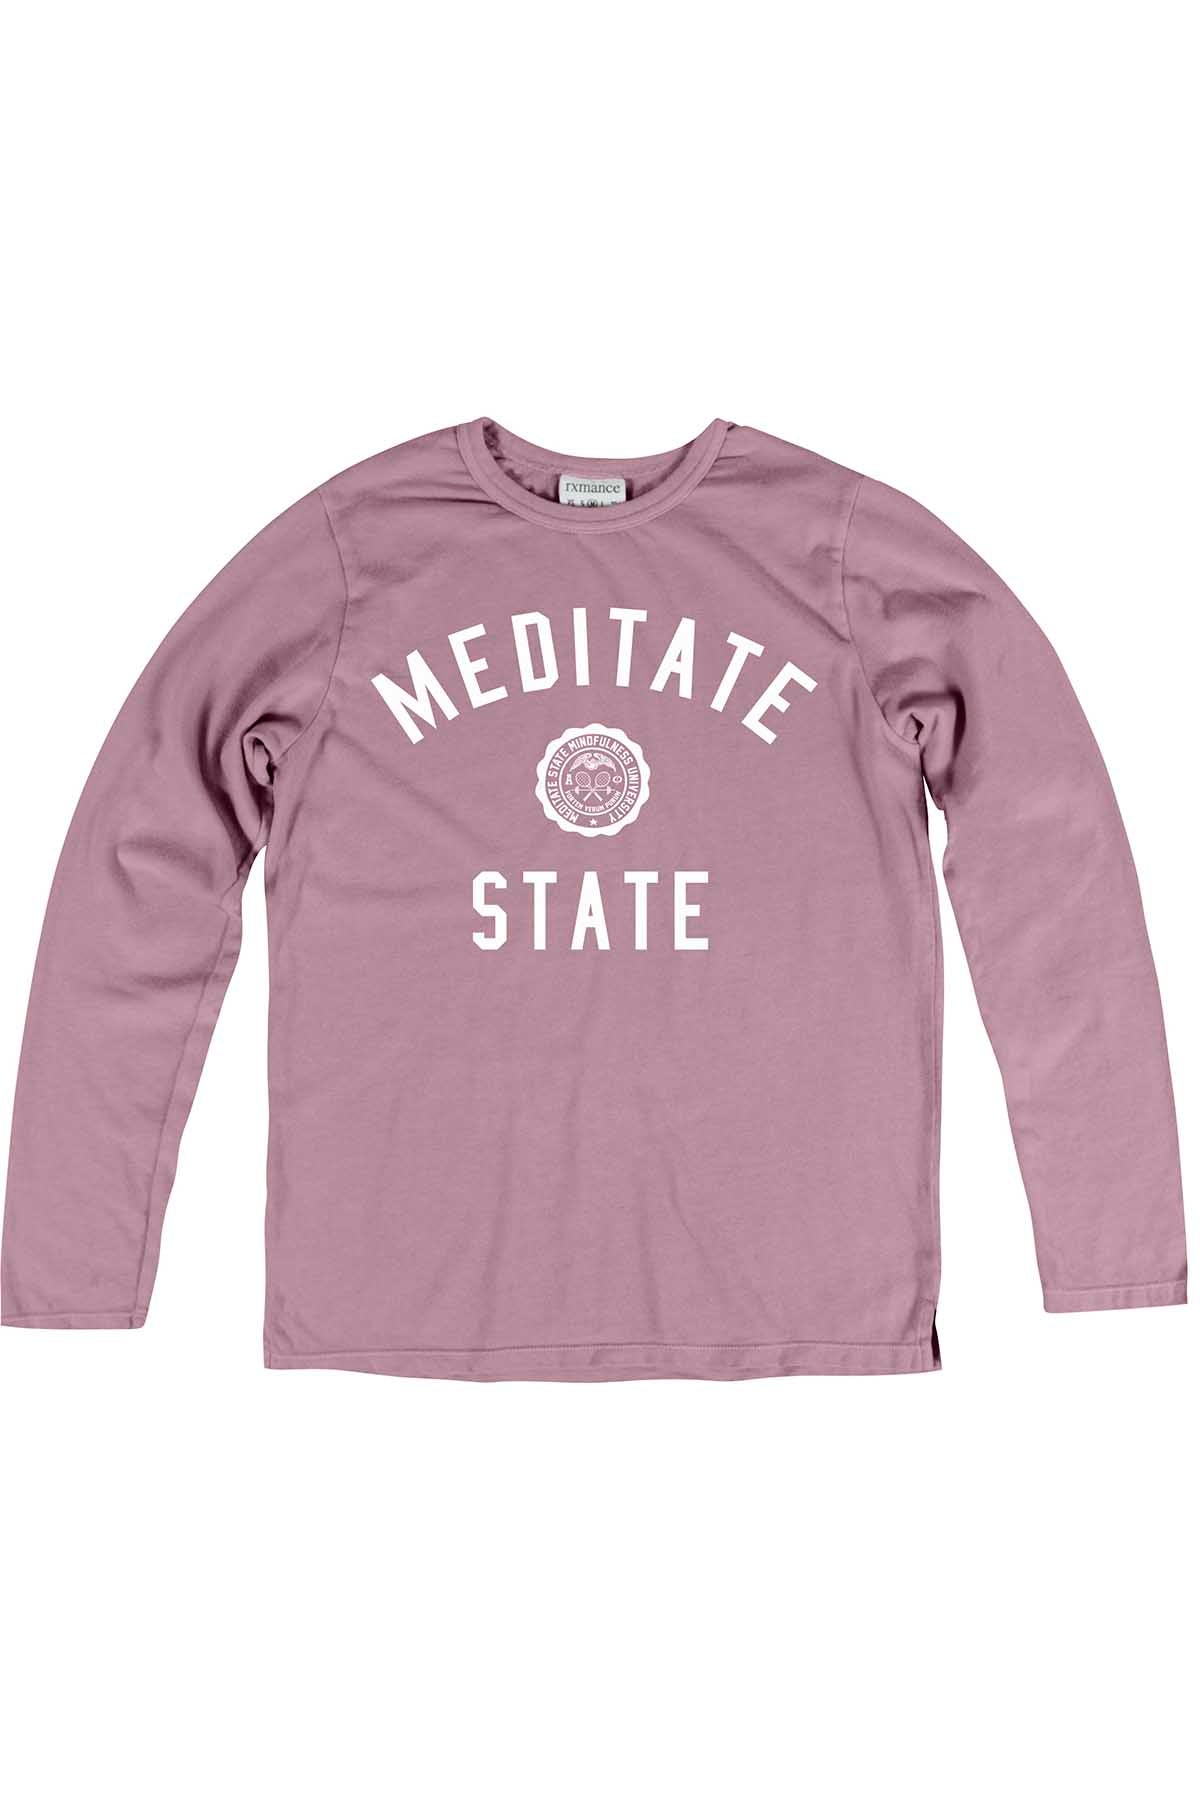 Rxmance Unisex Faded-Rose Meditate-State Loose-Knit Long-Sleeve Shirt